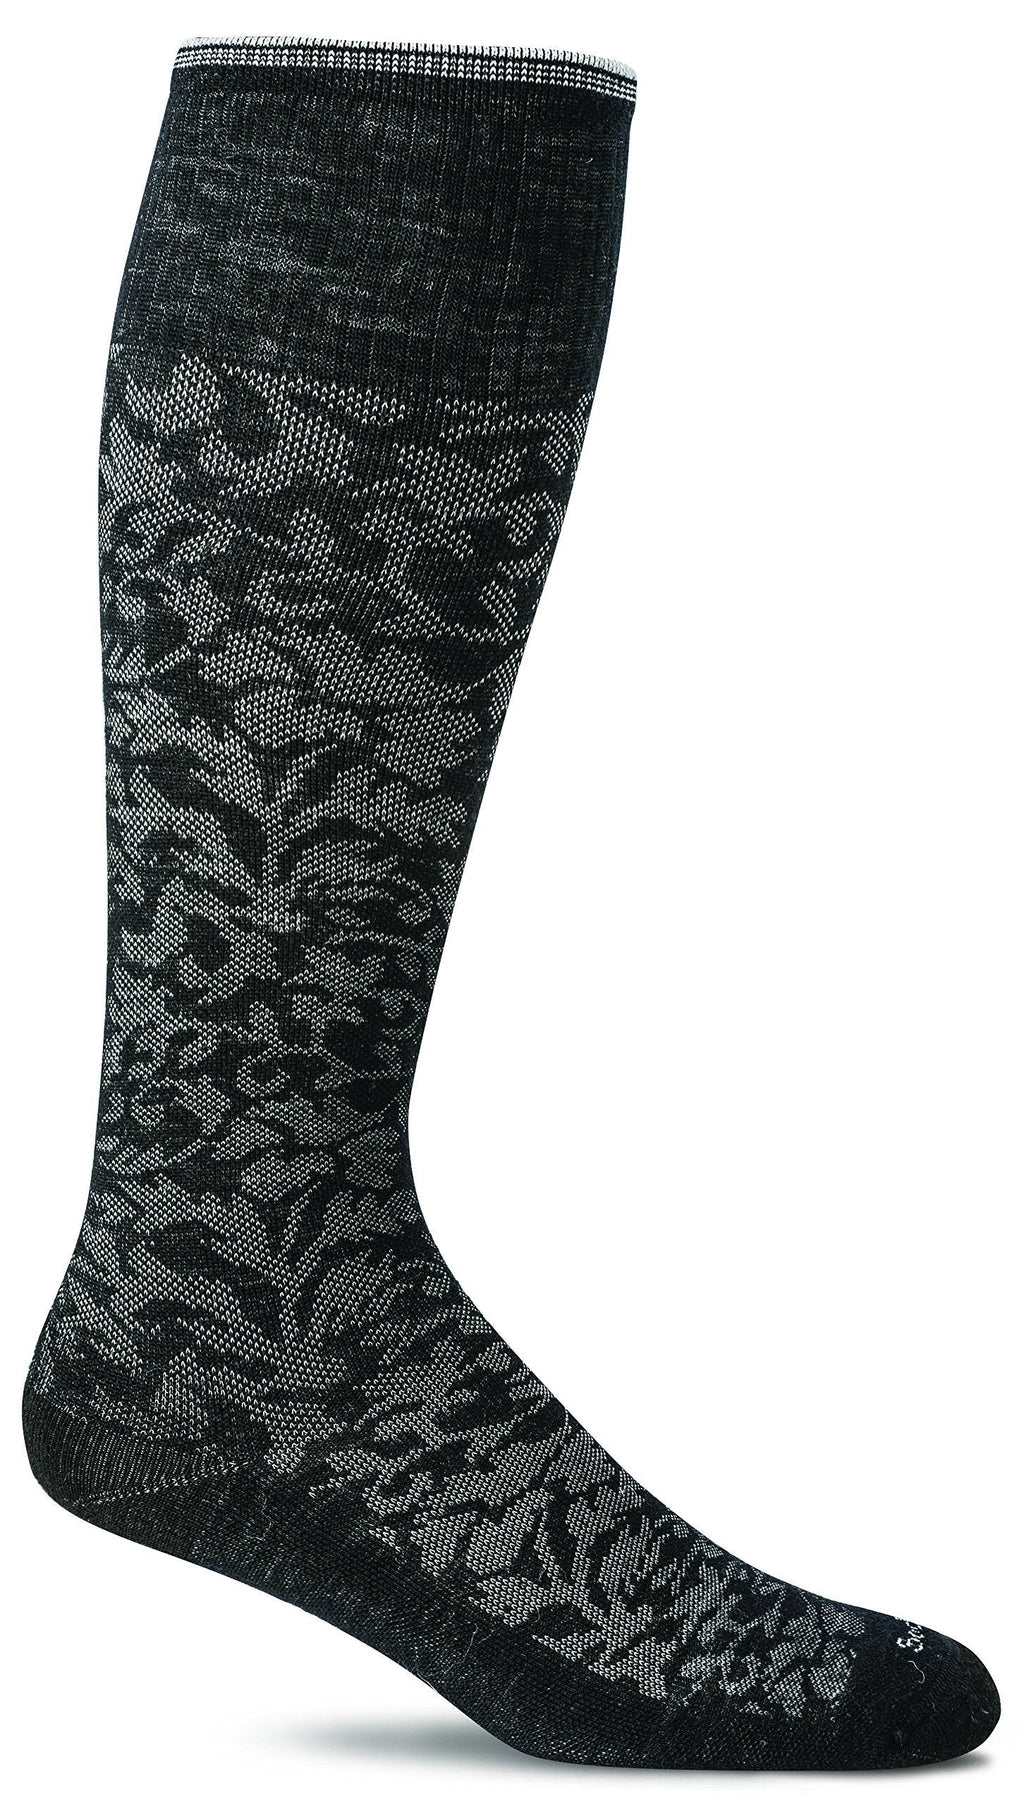 [AUSTRALIA] - Sockwell Women's Damask Moderate Graduated Compression Socks Medium-Large Black 